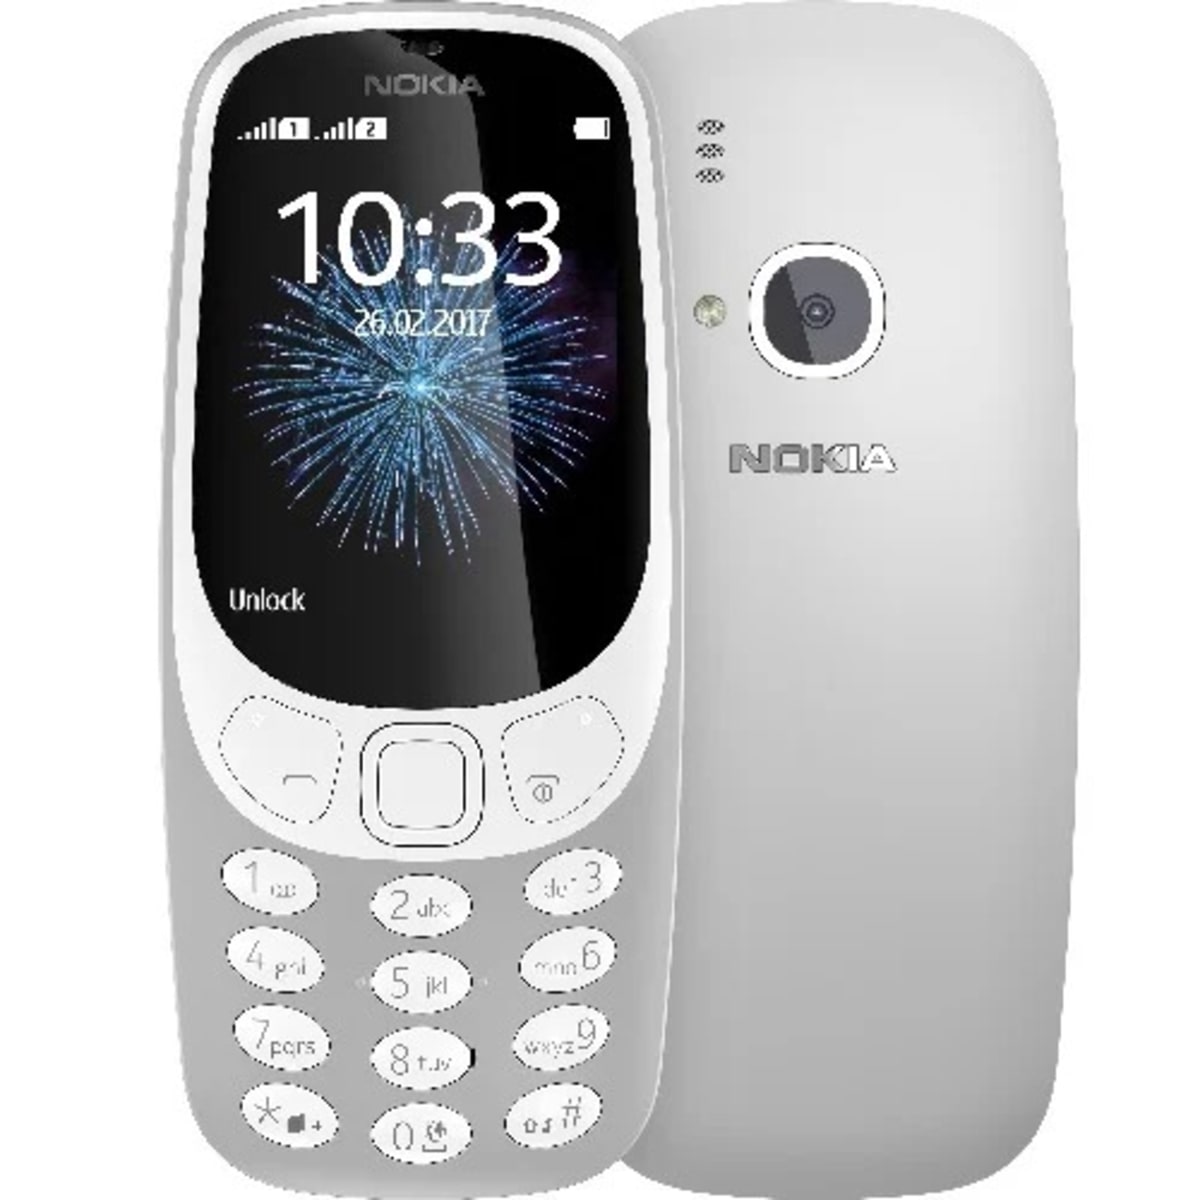 Nokia 3310 - Dual Sim - 2.4 - Camera - Torch - Fm Radio Phone - 1200mAh -  Grey